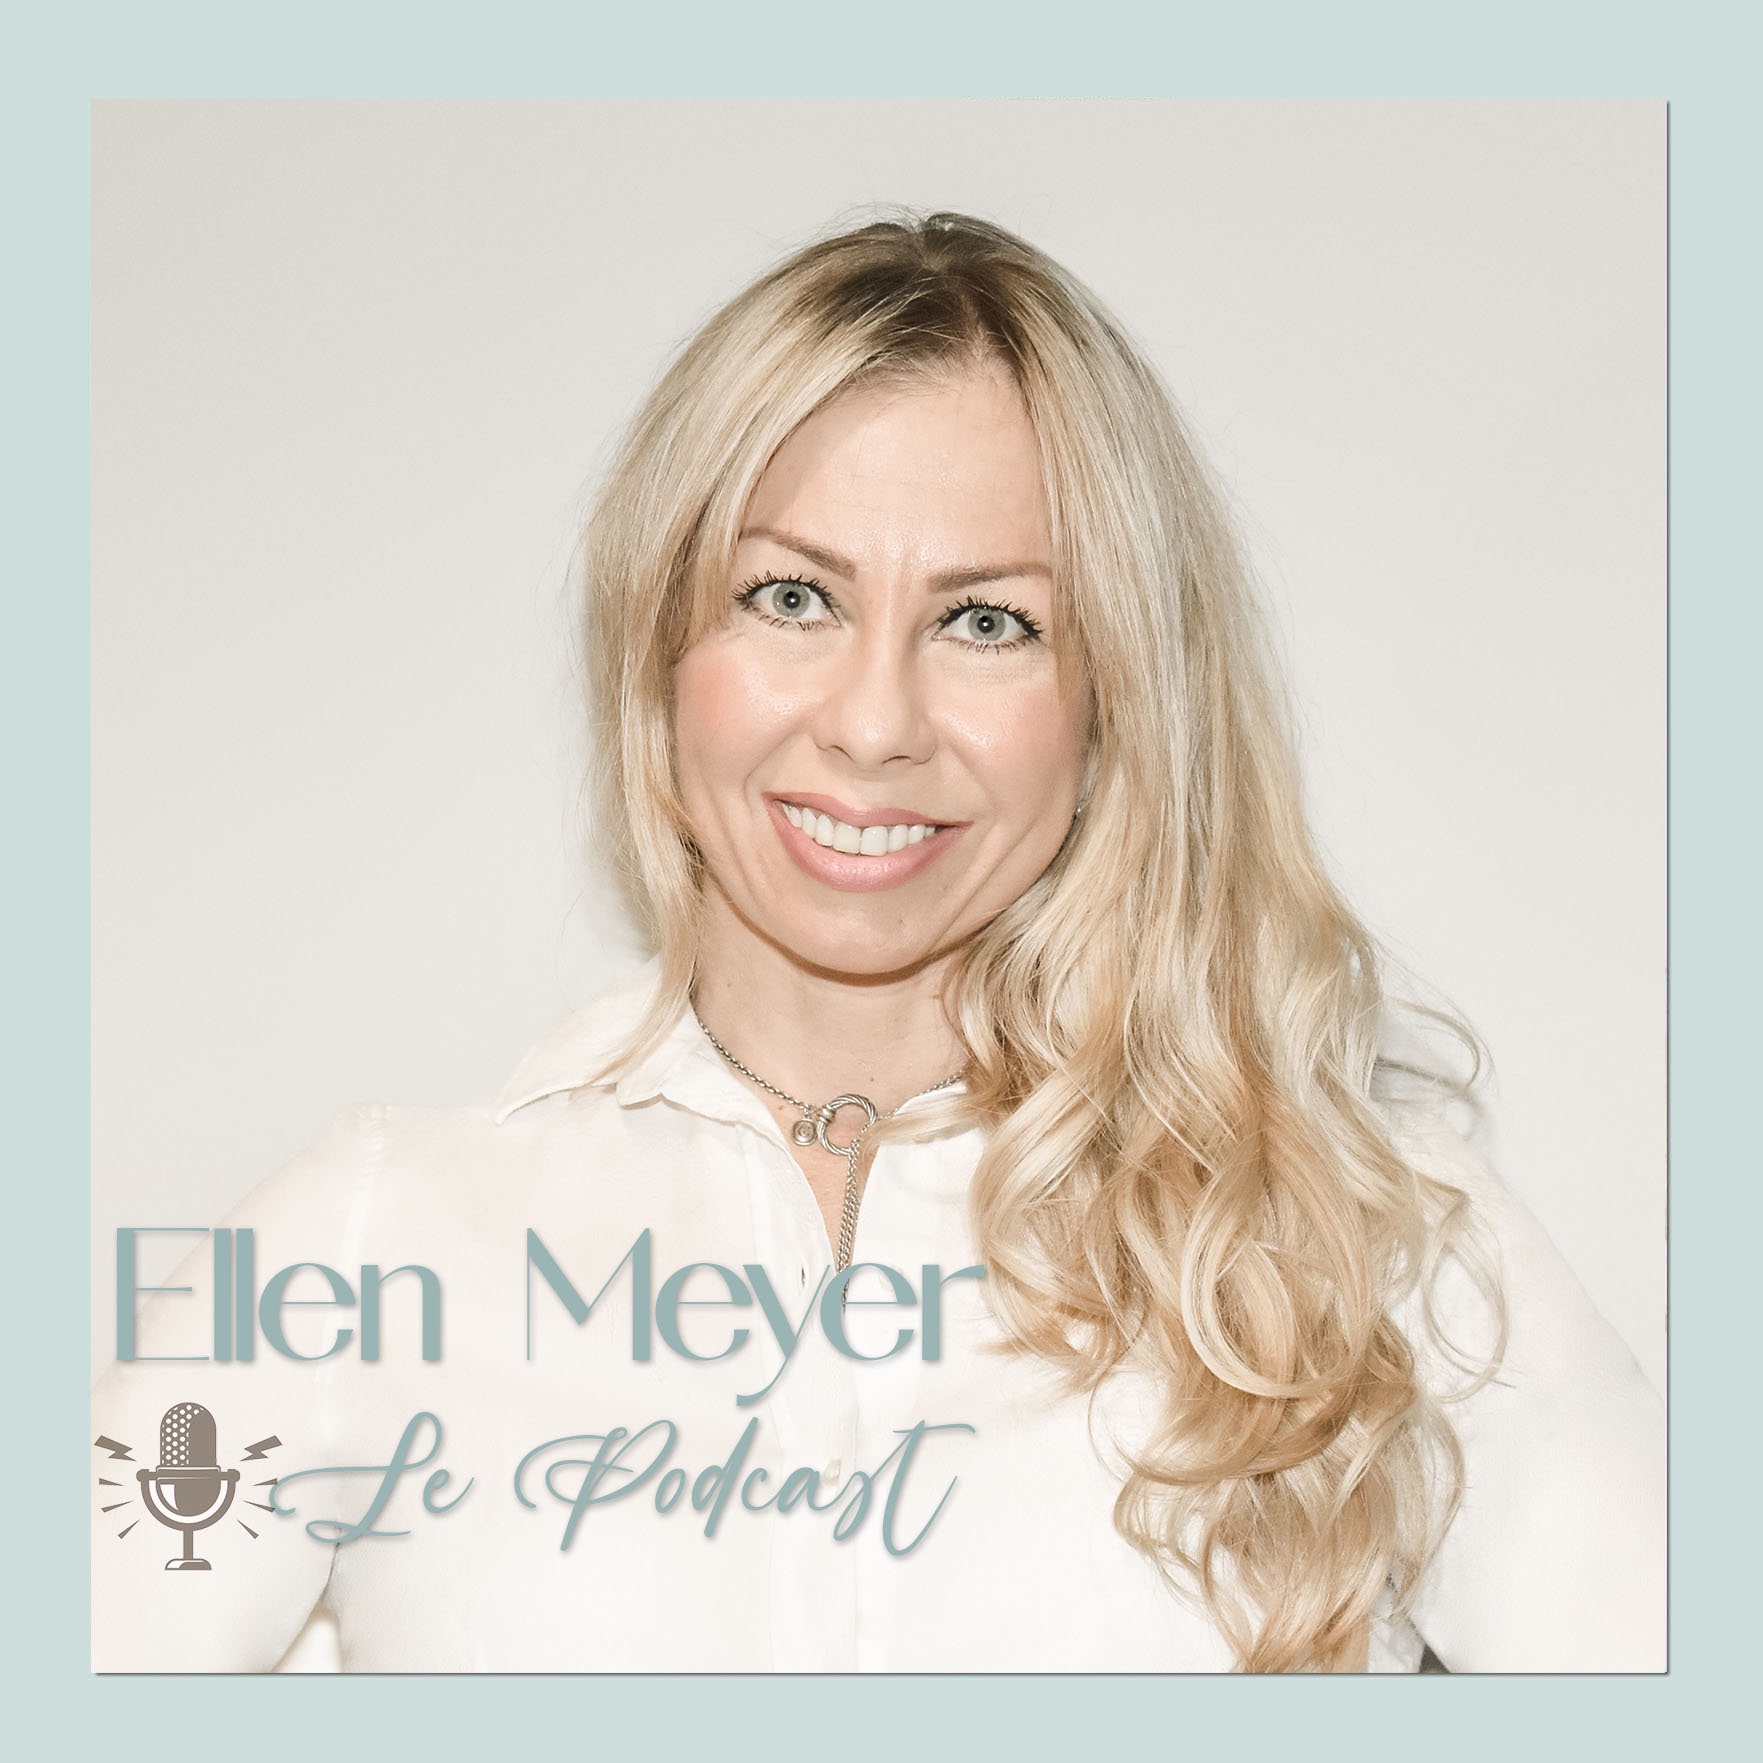 Ellen Meyer - Le Podcast